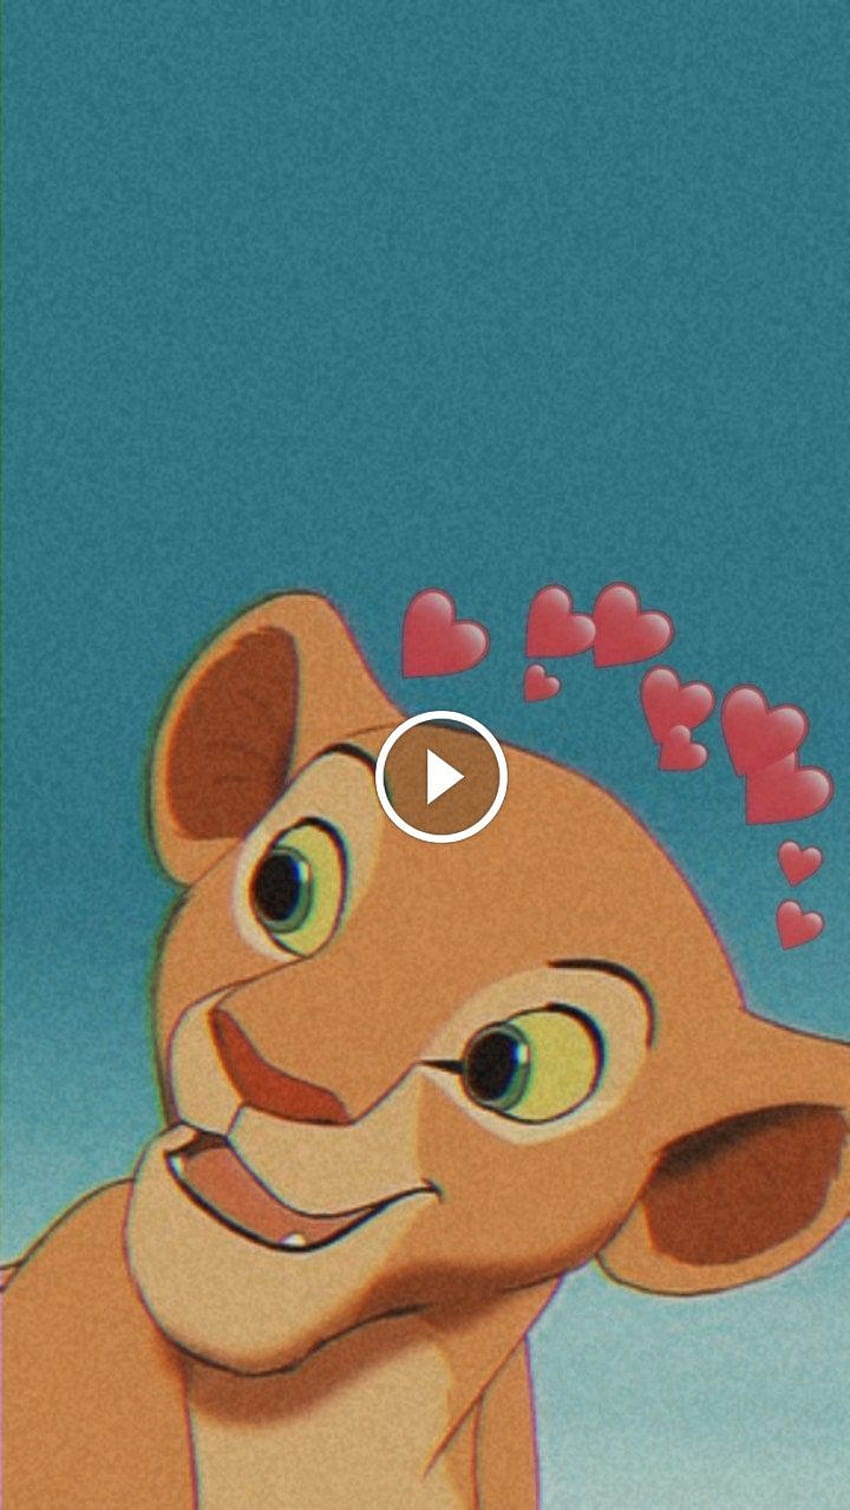 beyonce as nala the lion king 2019 4k iPhone X Wallpapers Free Download